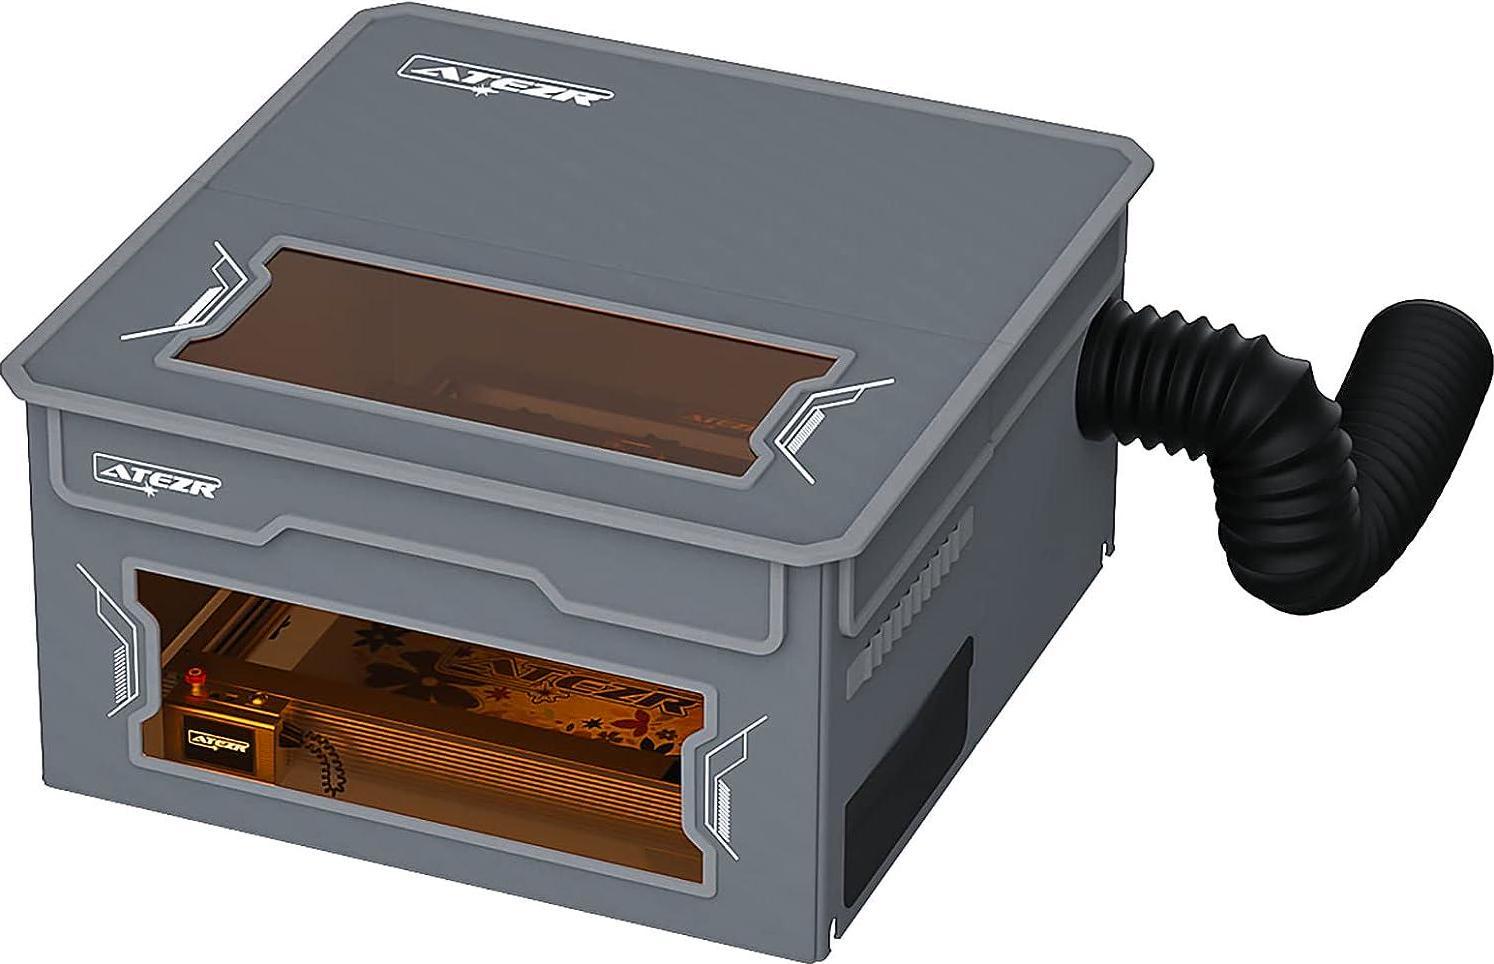 Official SCULPFUN Laser Engraver Dust-Proof Enclosure Smoke Exhaust Box